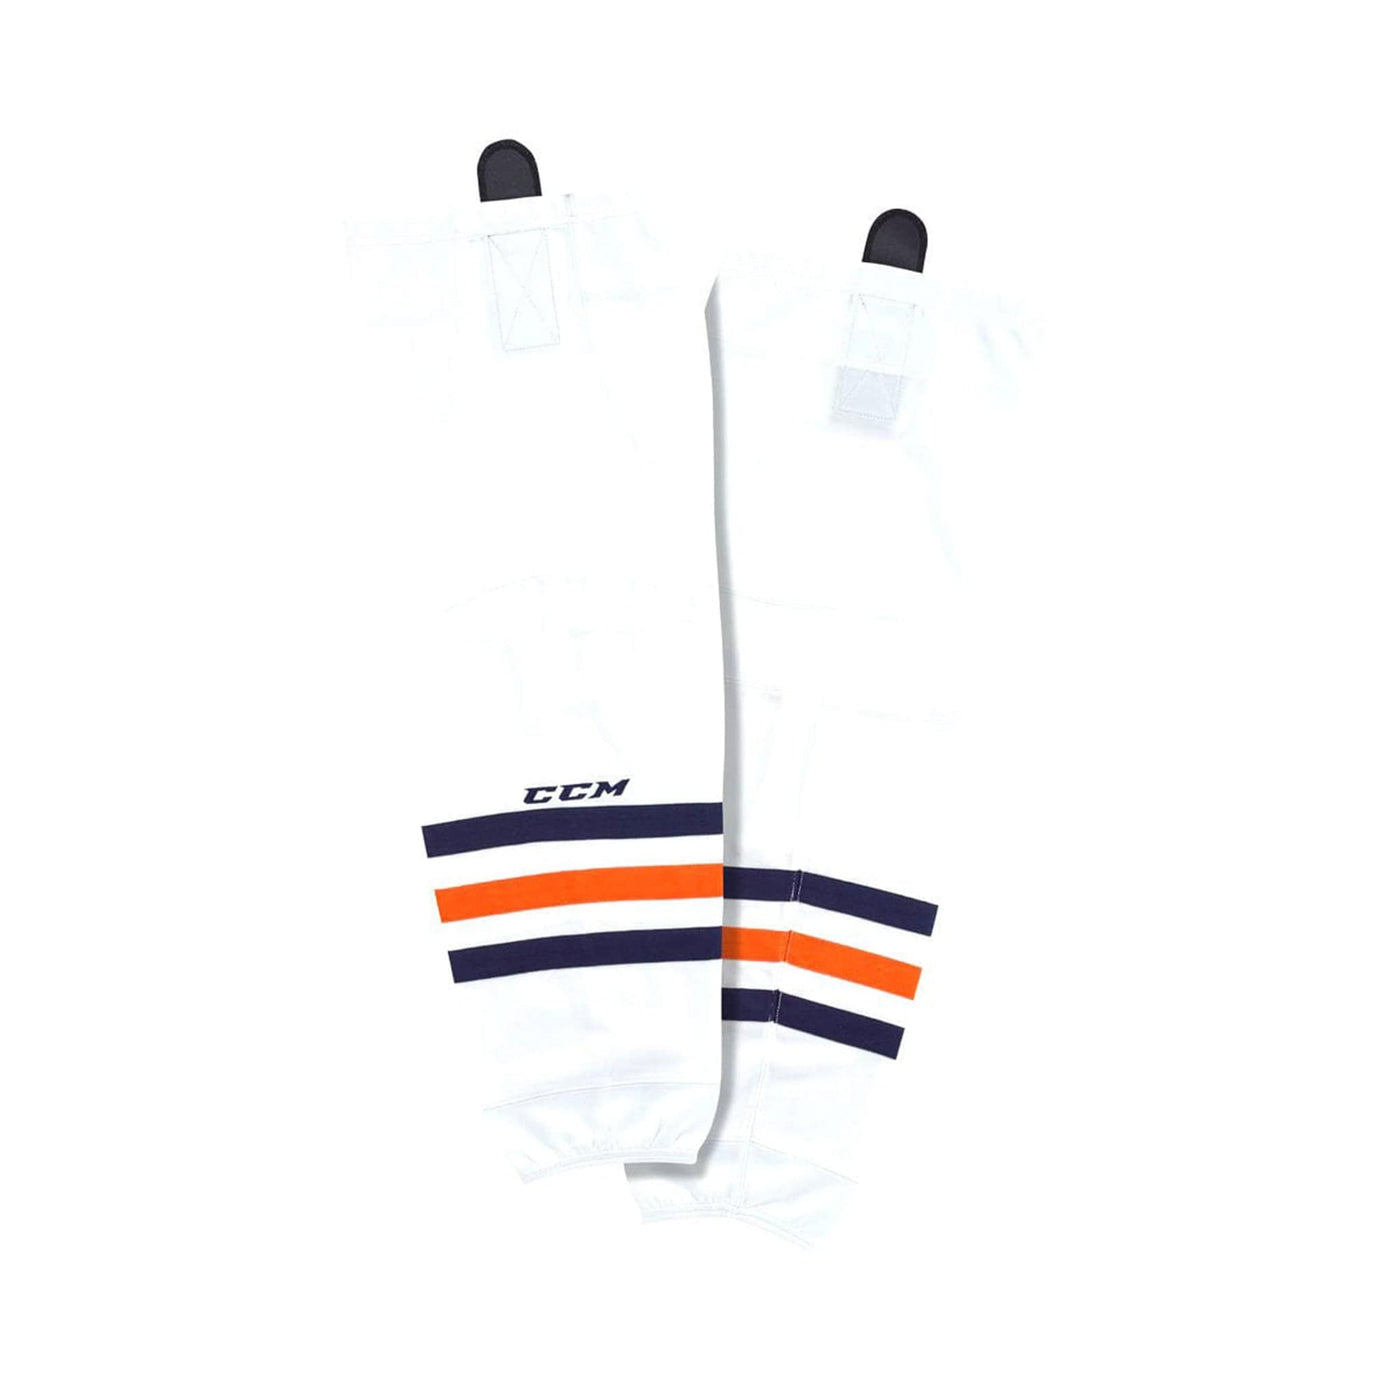 Edmonton Oilers Away CCM Quicklite 8000 Hockey Socks - The Hockey Shop Source For Sports